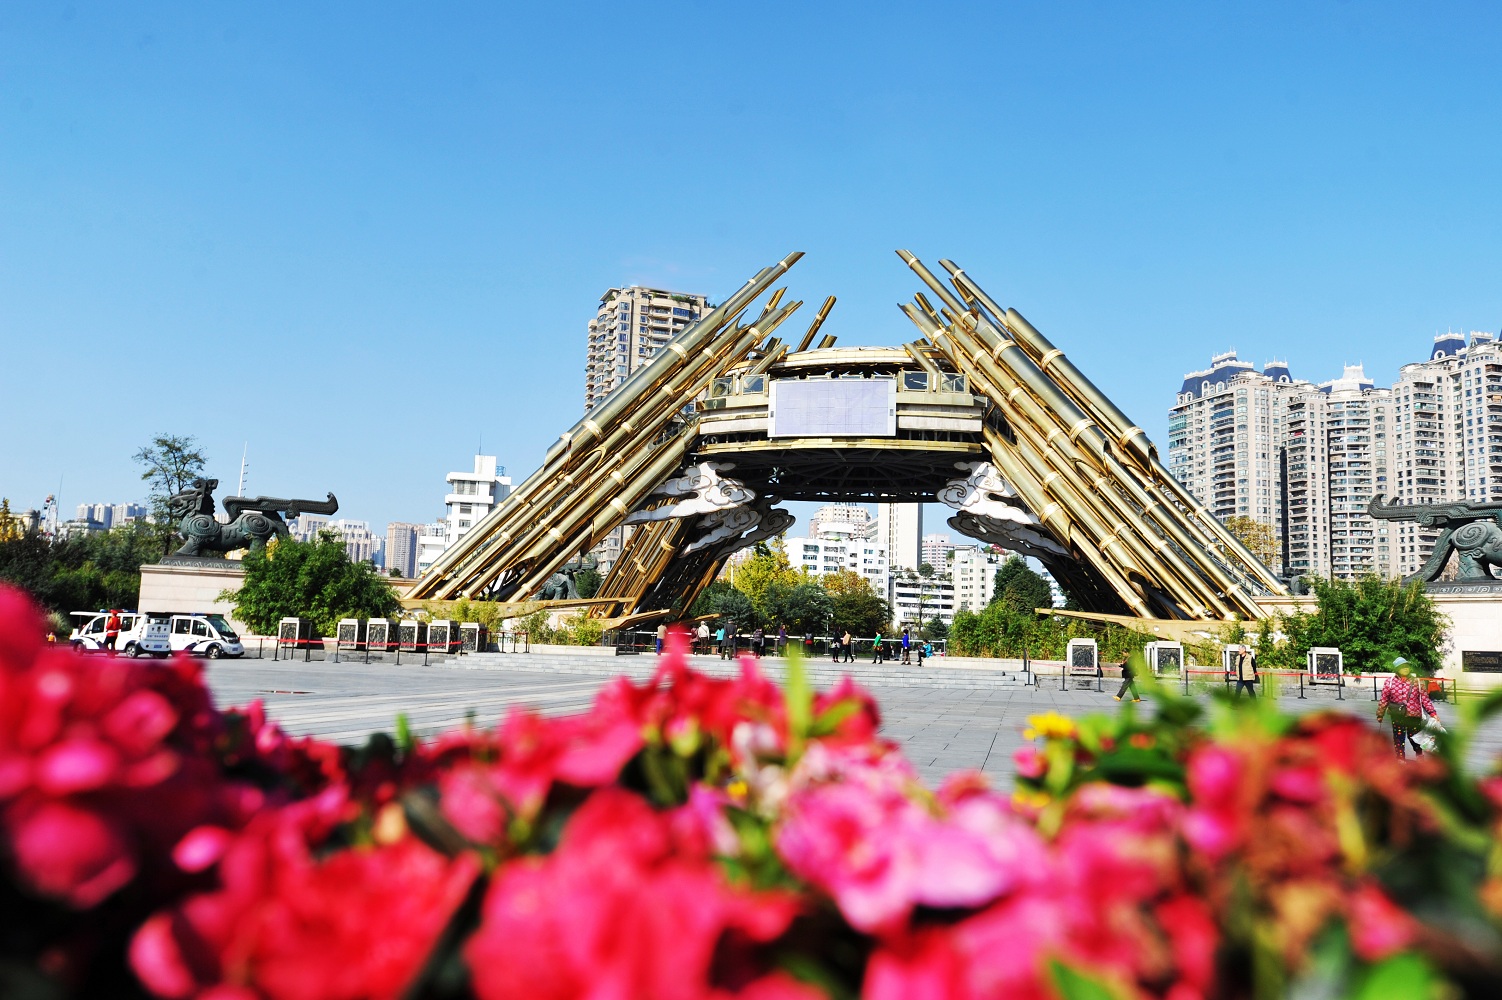 Nanming ranks 67th in high-quality development nationwide